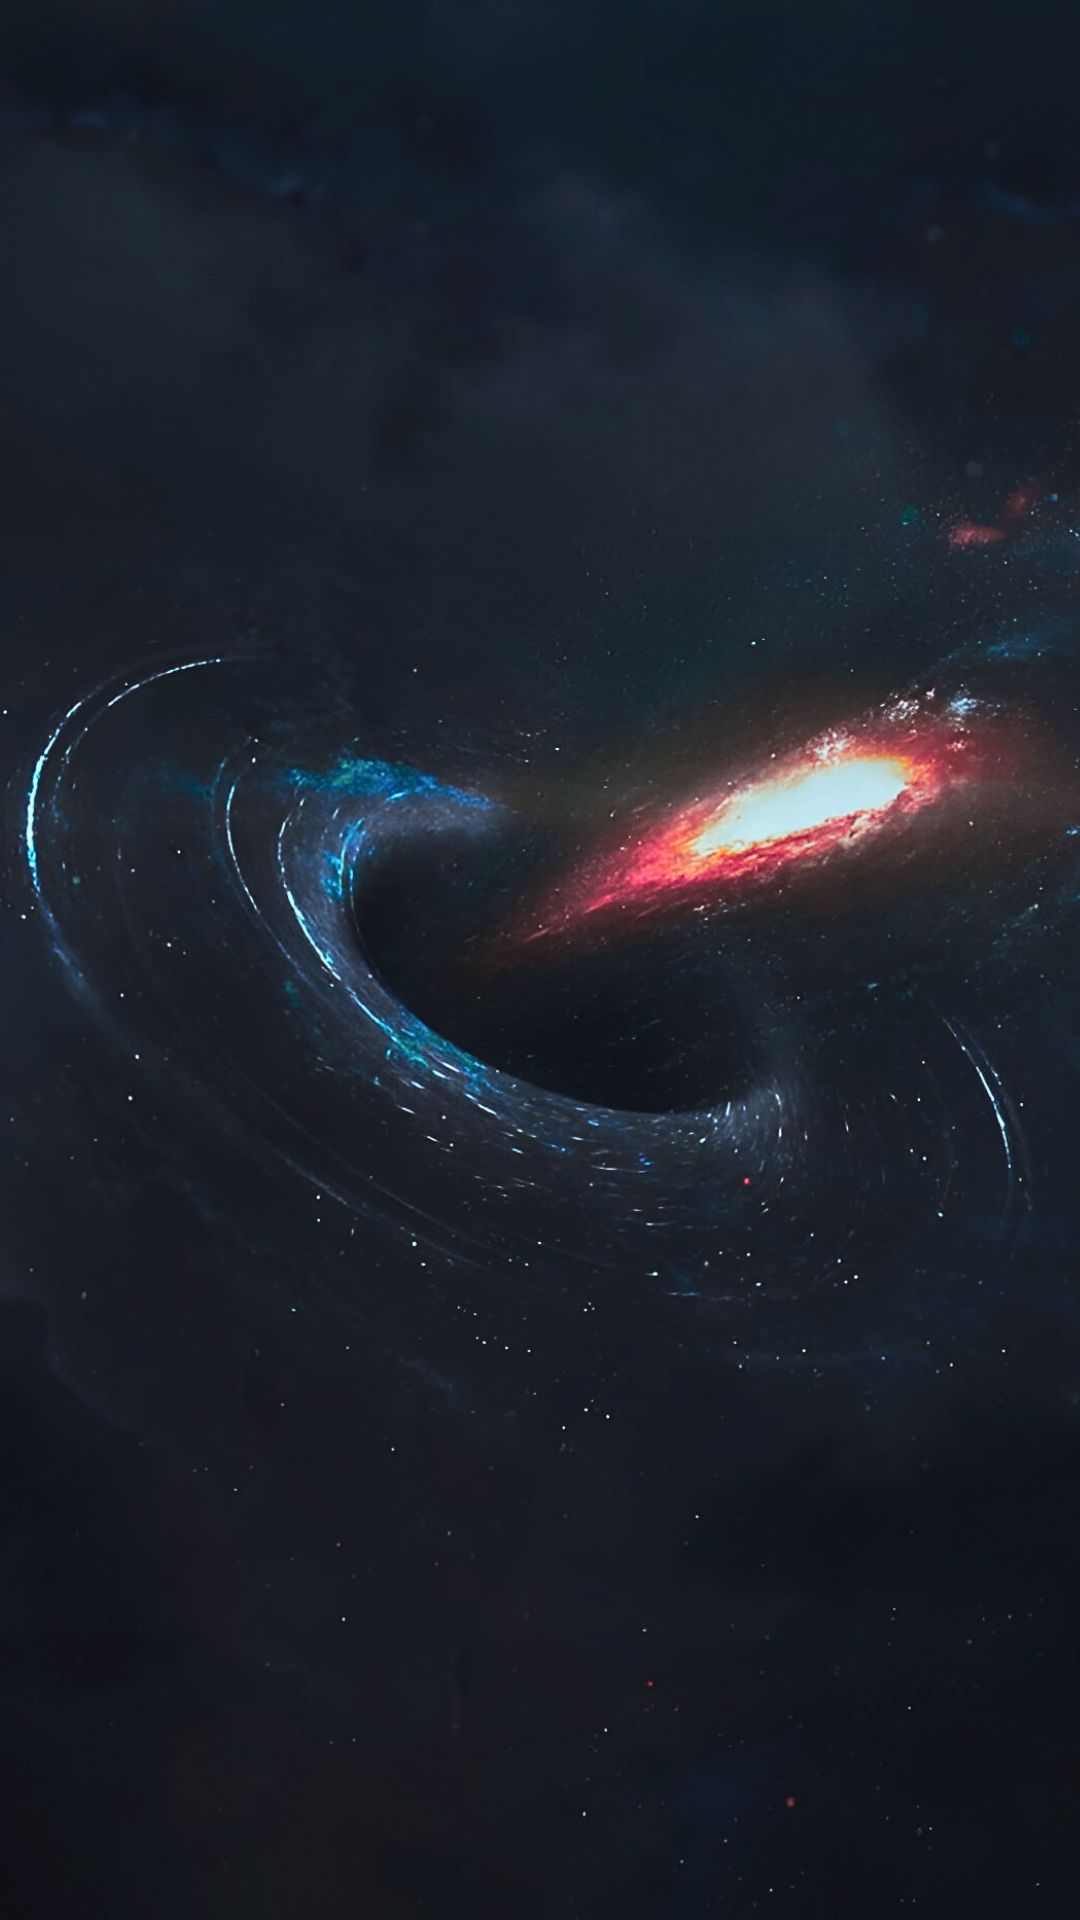 Black Hole Milky Way Galaxy